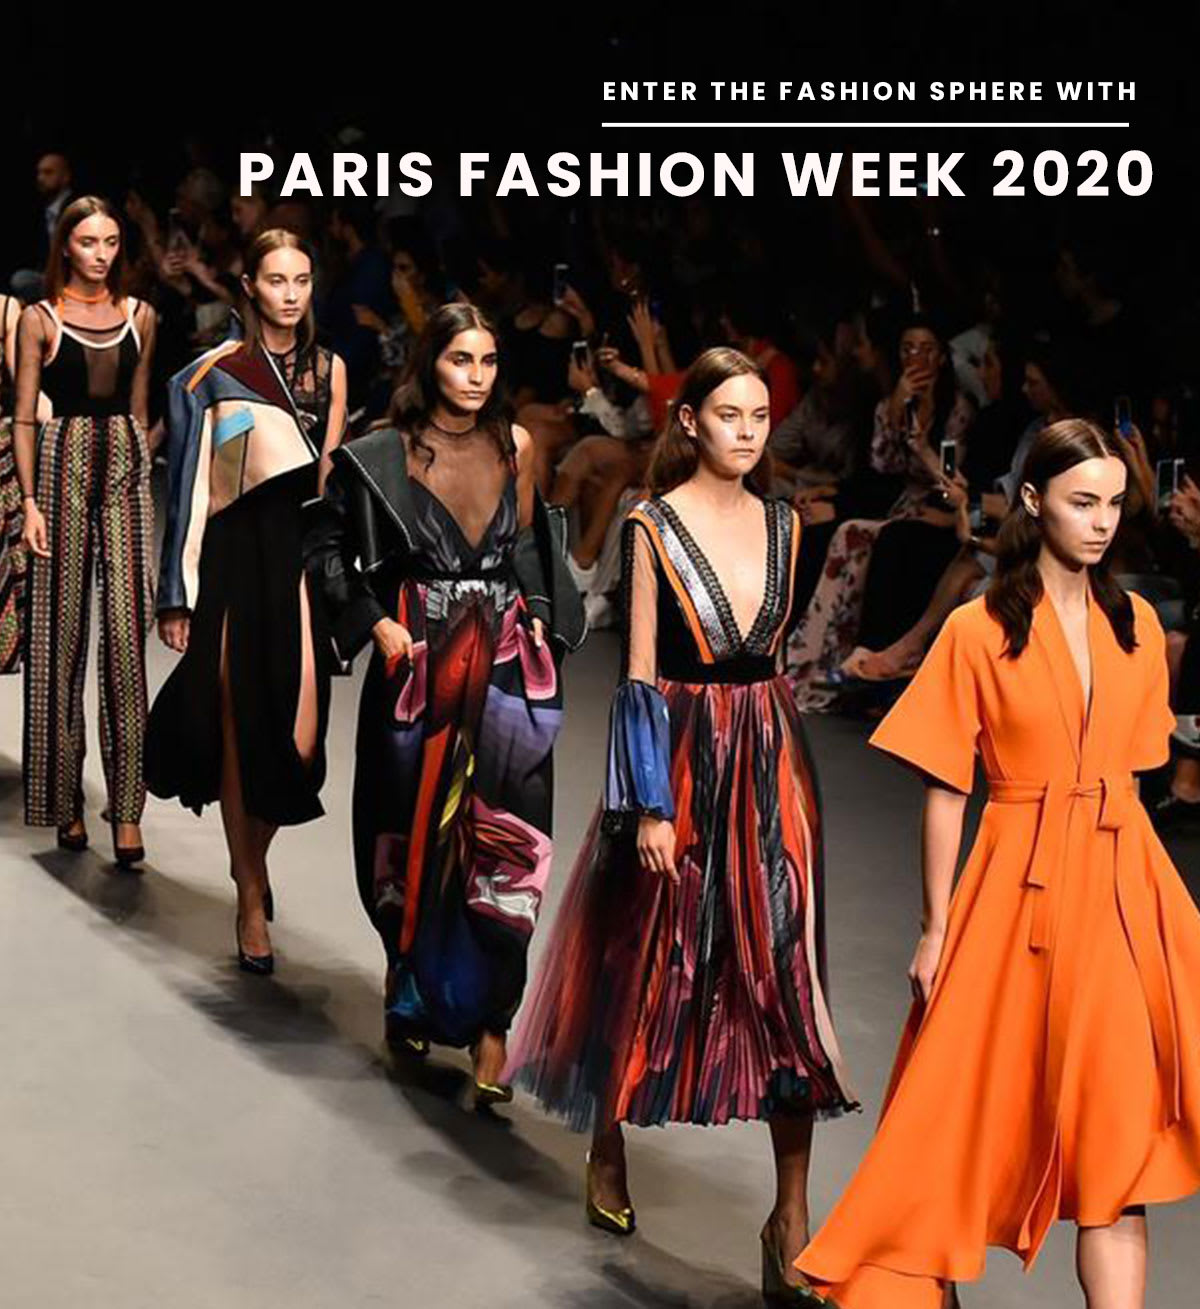 Paris Fashion Week - A Look Back at 2019 & A Look Forward to 2020